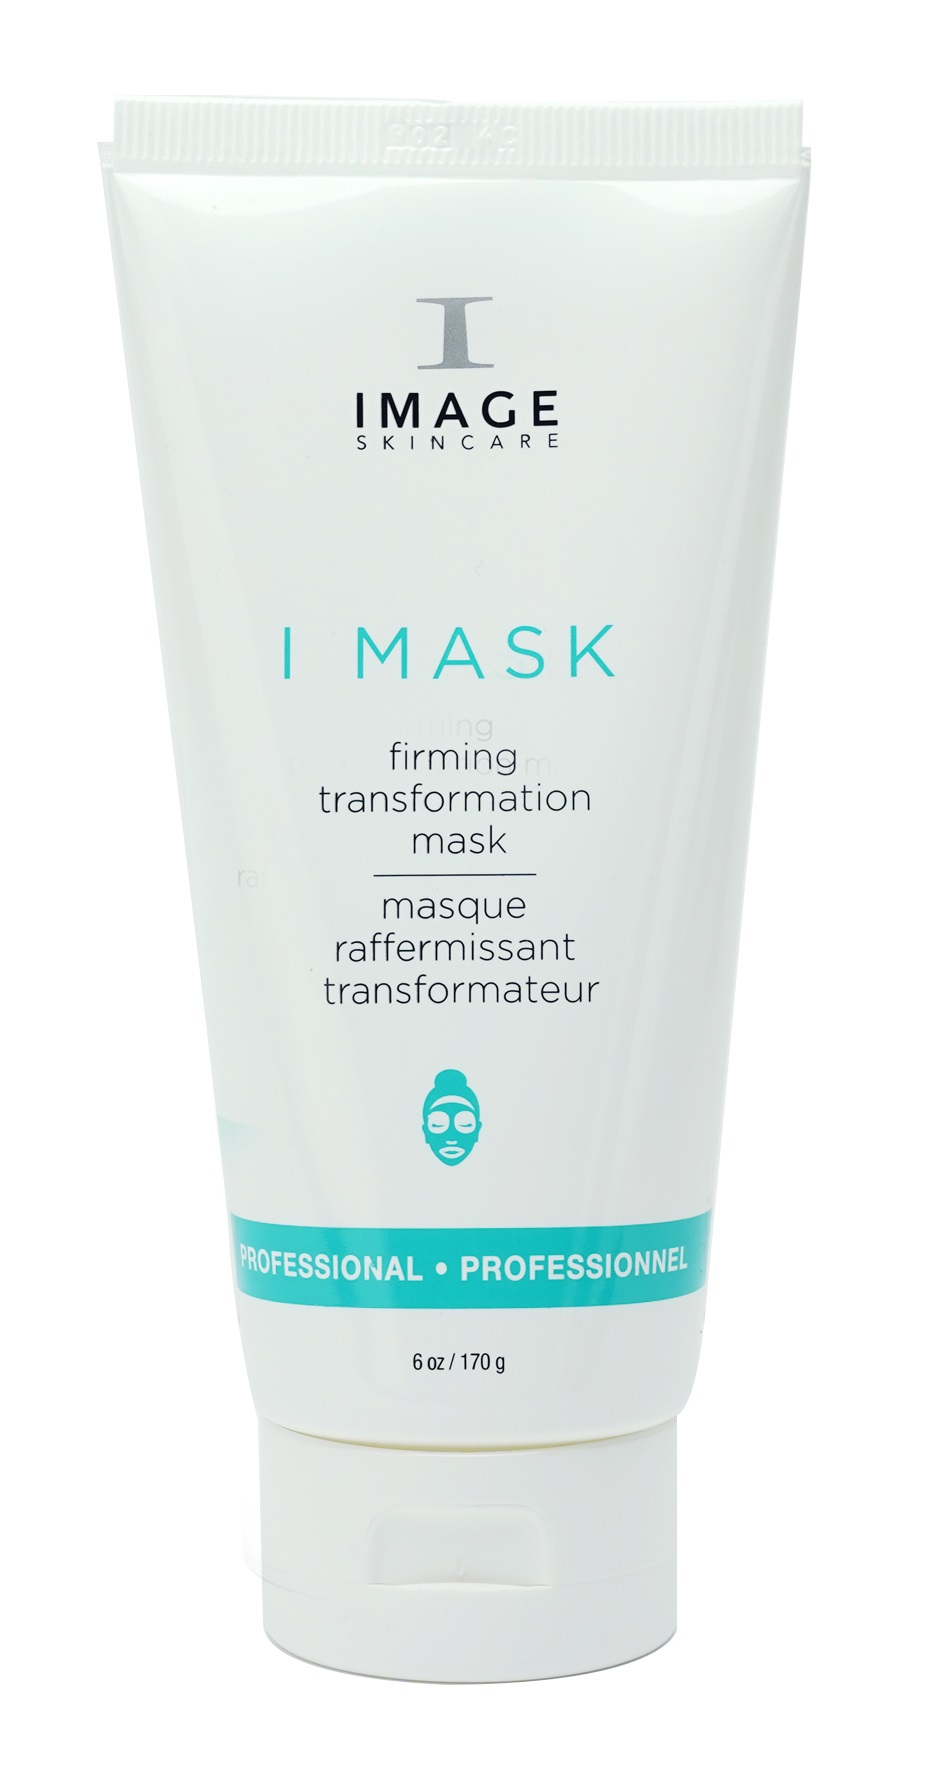 Image Skincare I Mask Firming Transformation Mask